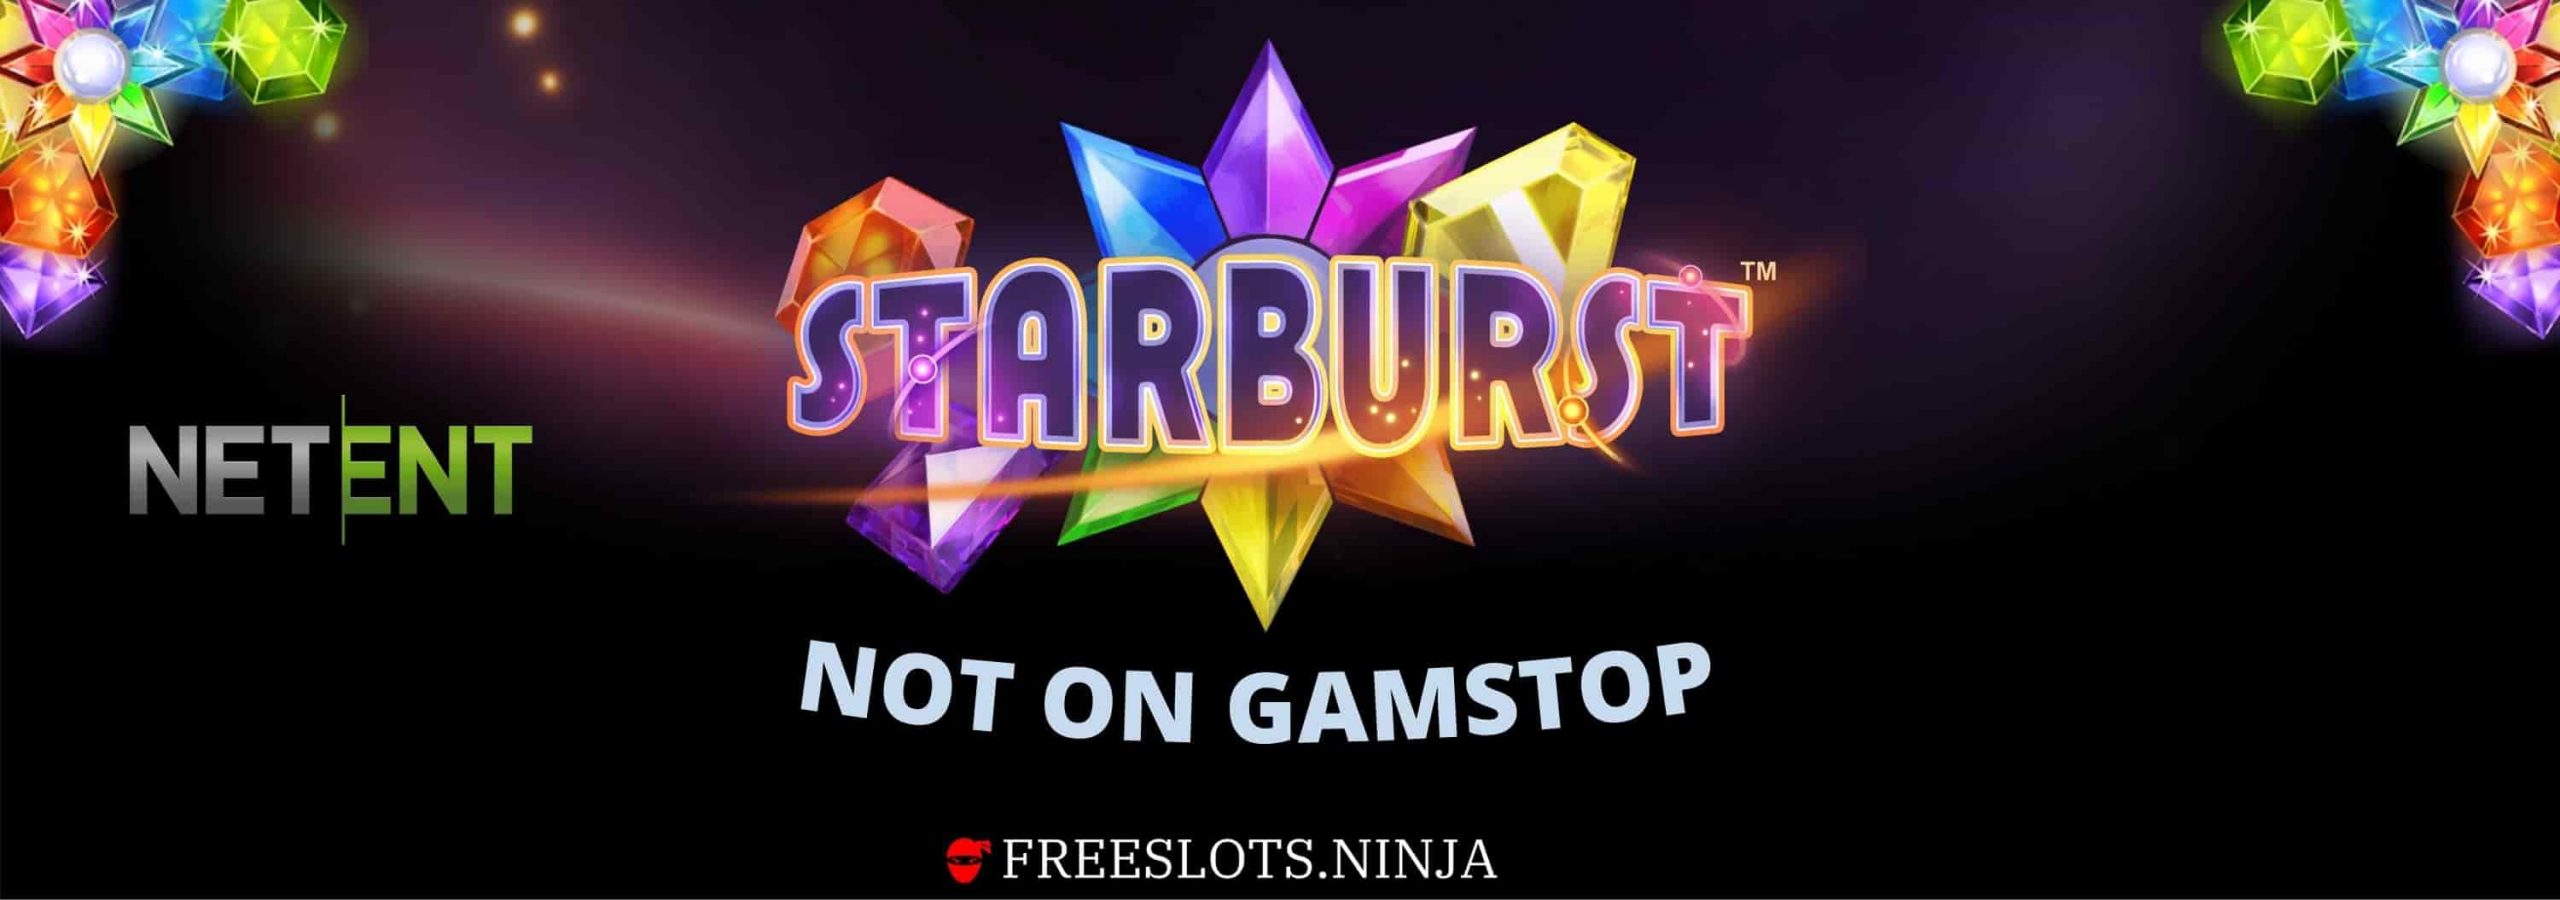 starburst slot not blocked by gamstop